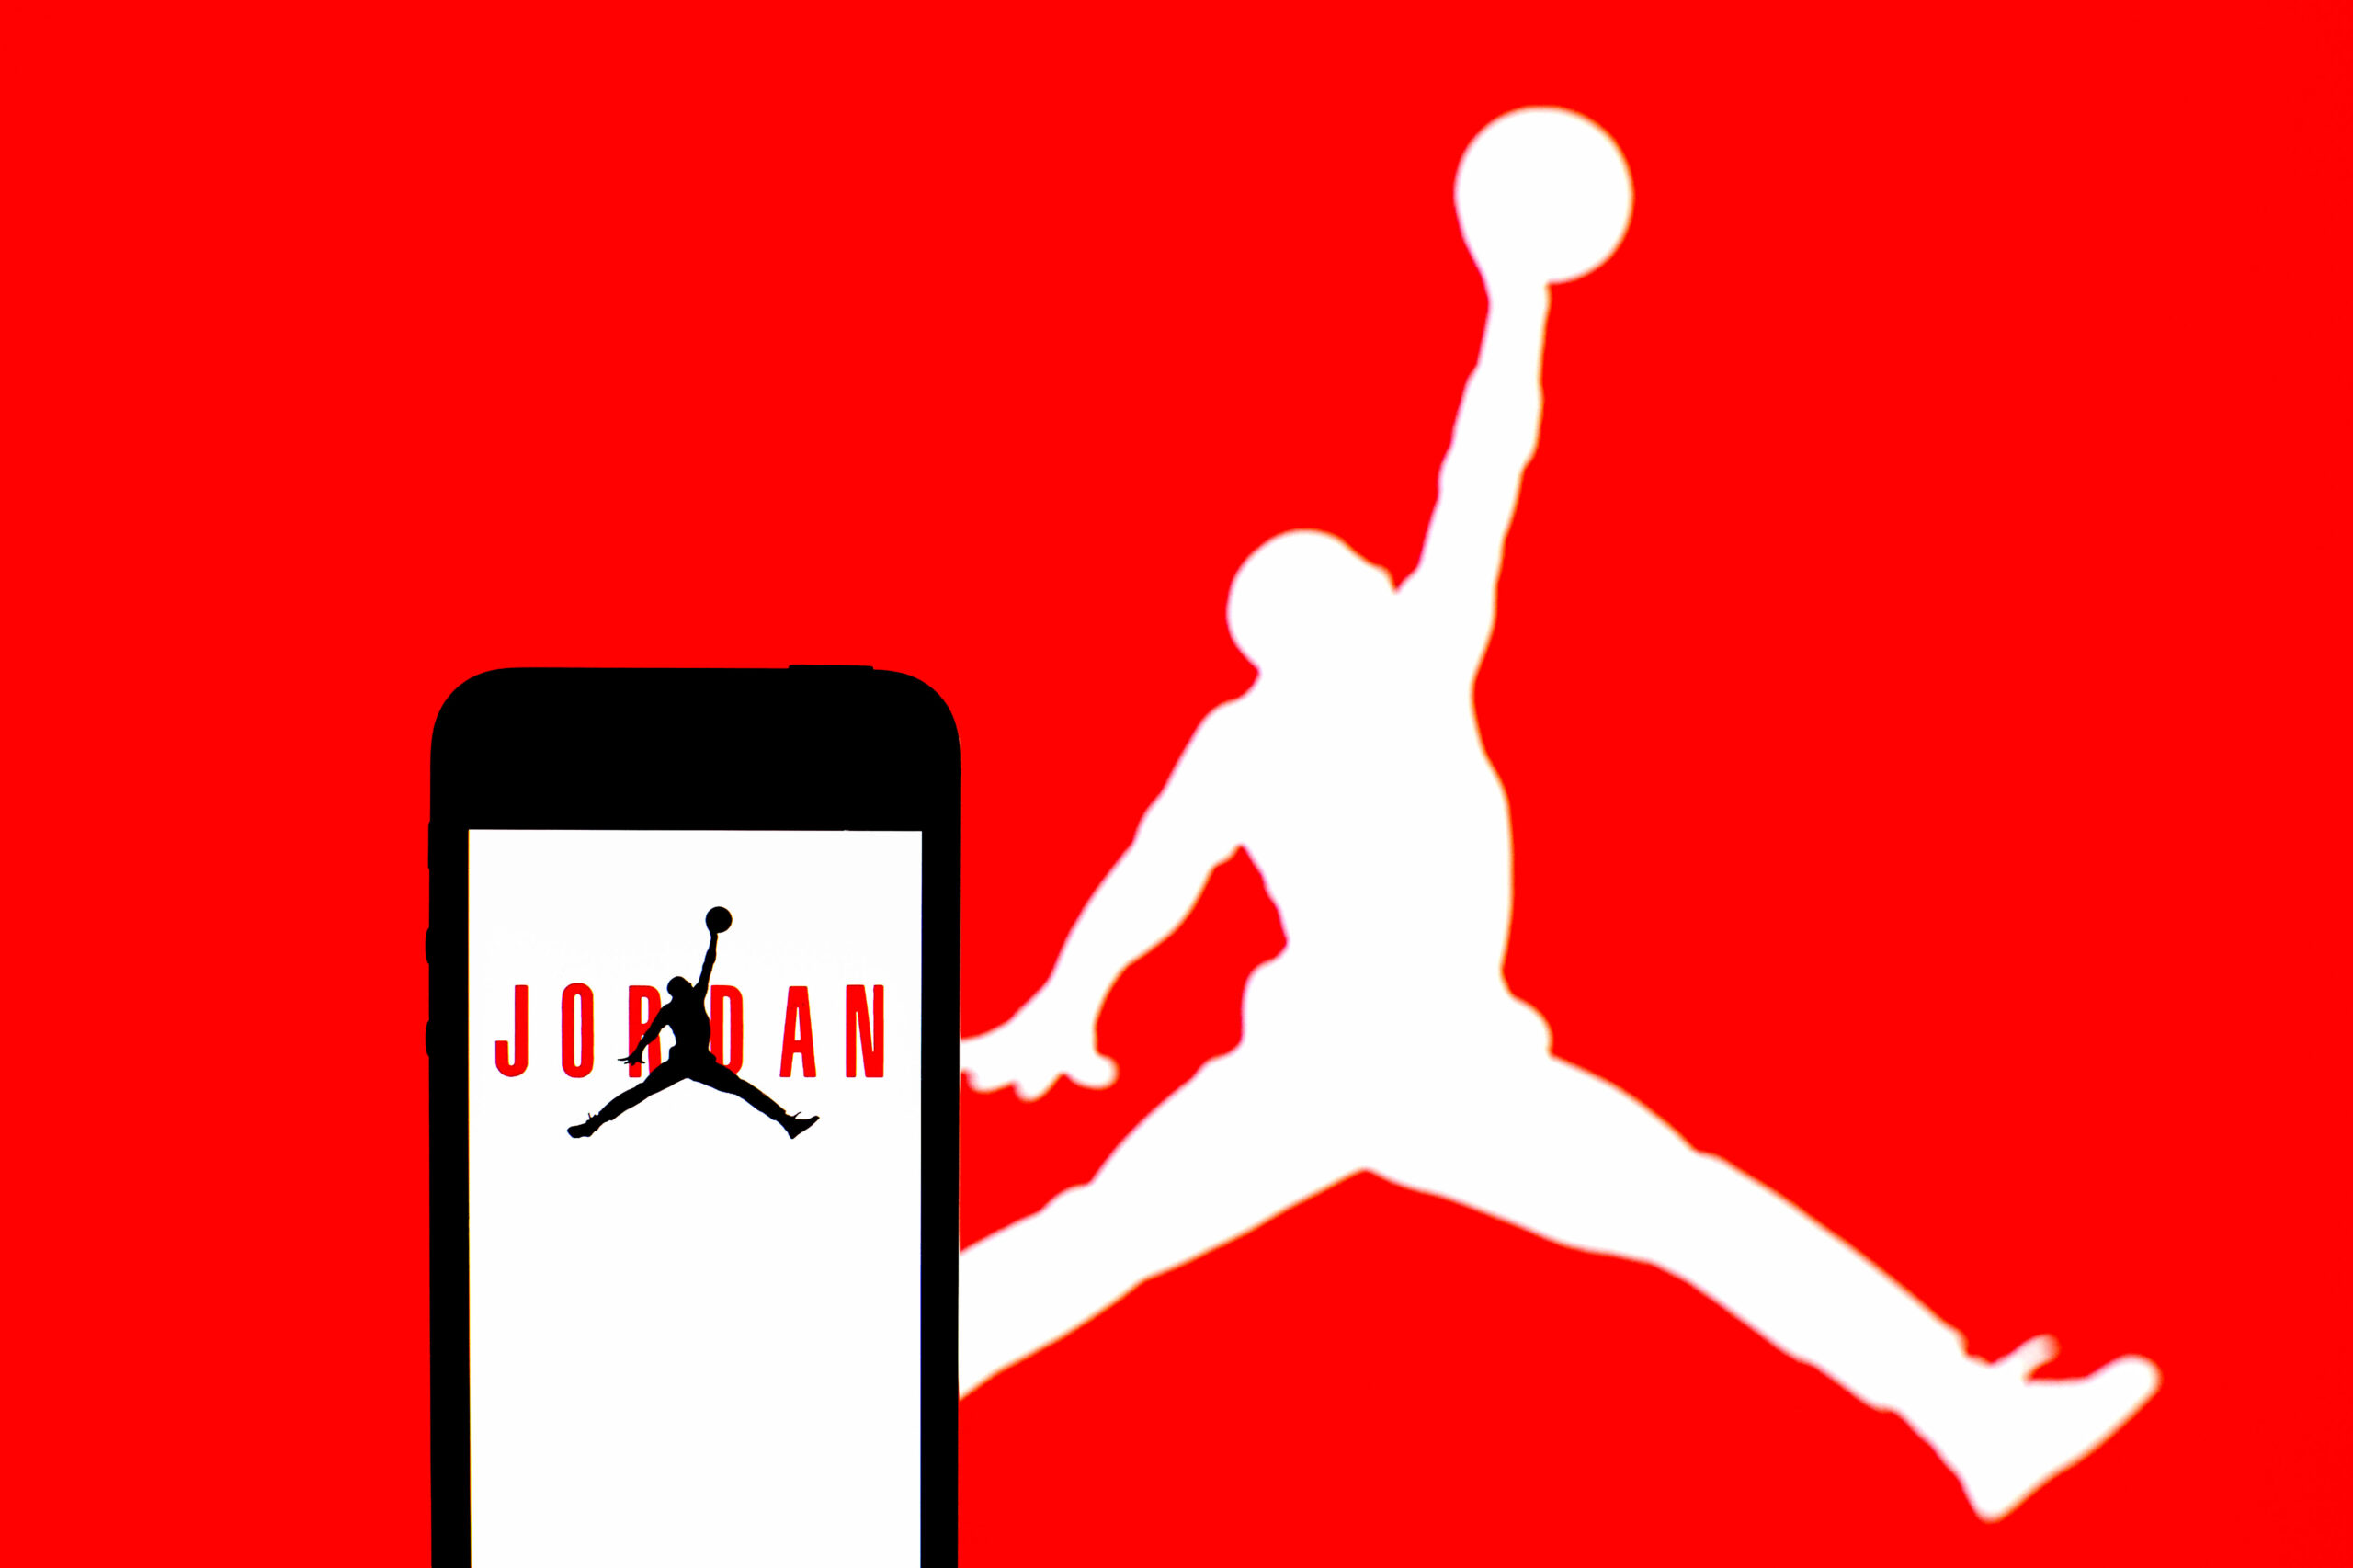 Air Jordan 1 High OG “Satin Bred” Gets Another Detailed Look